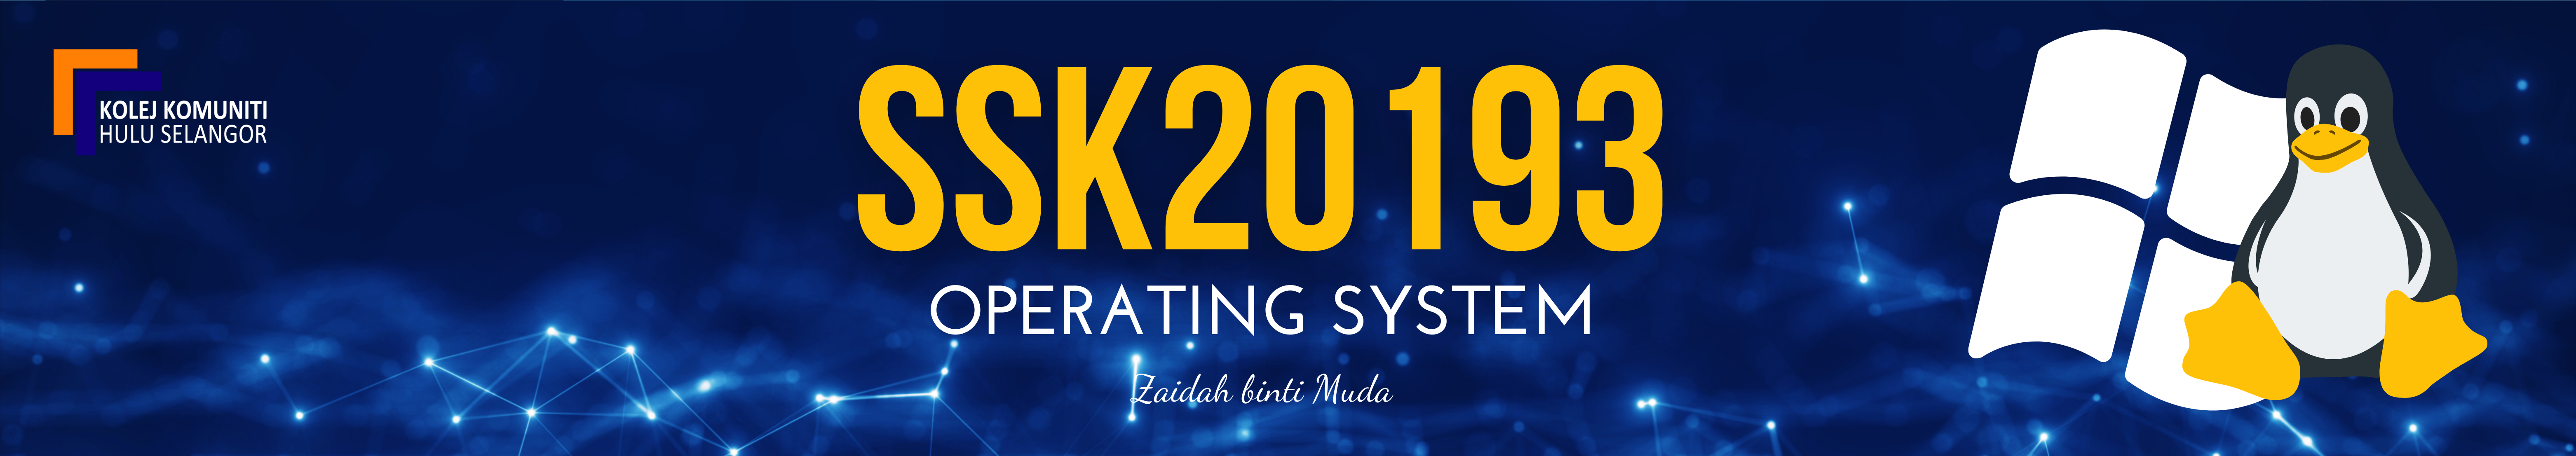 KKHS | SSK20193 OPERATING SYSTEM